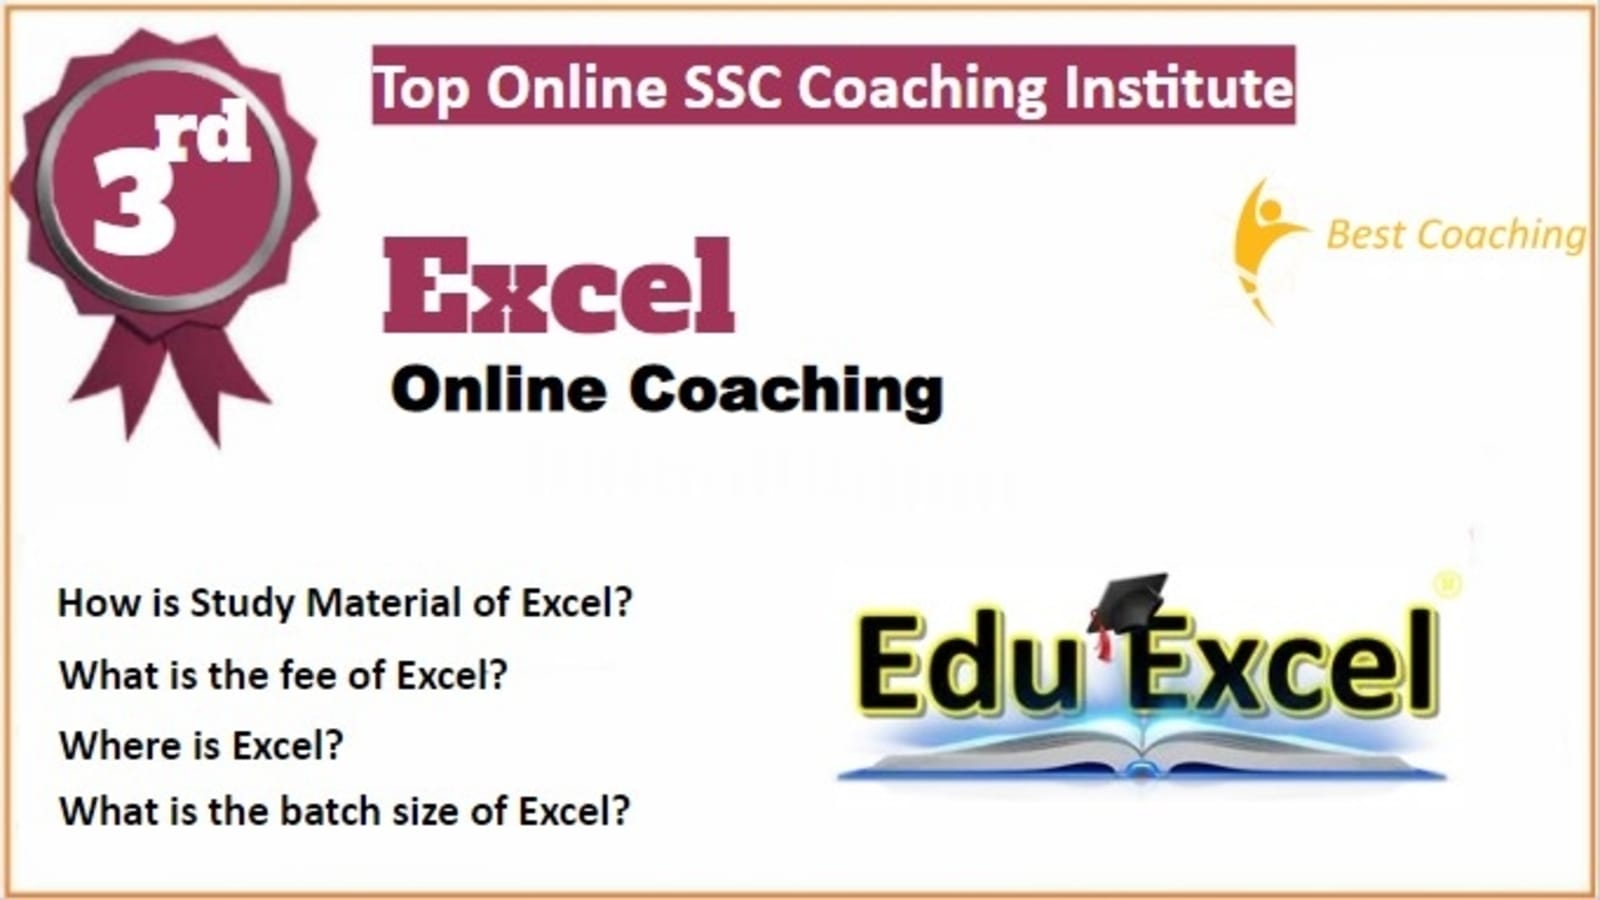 Rank 3 Best Online SSC Coaching